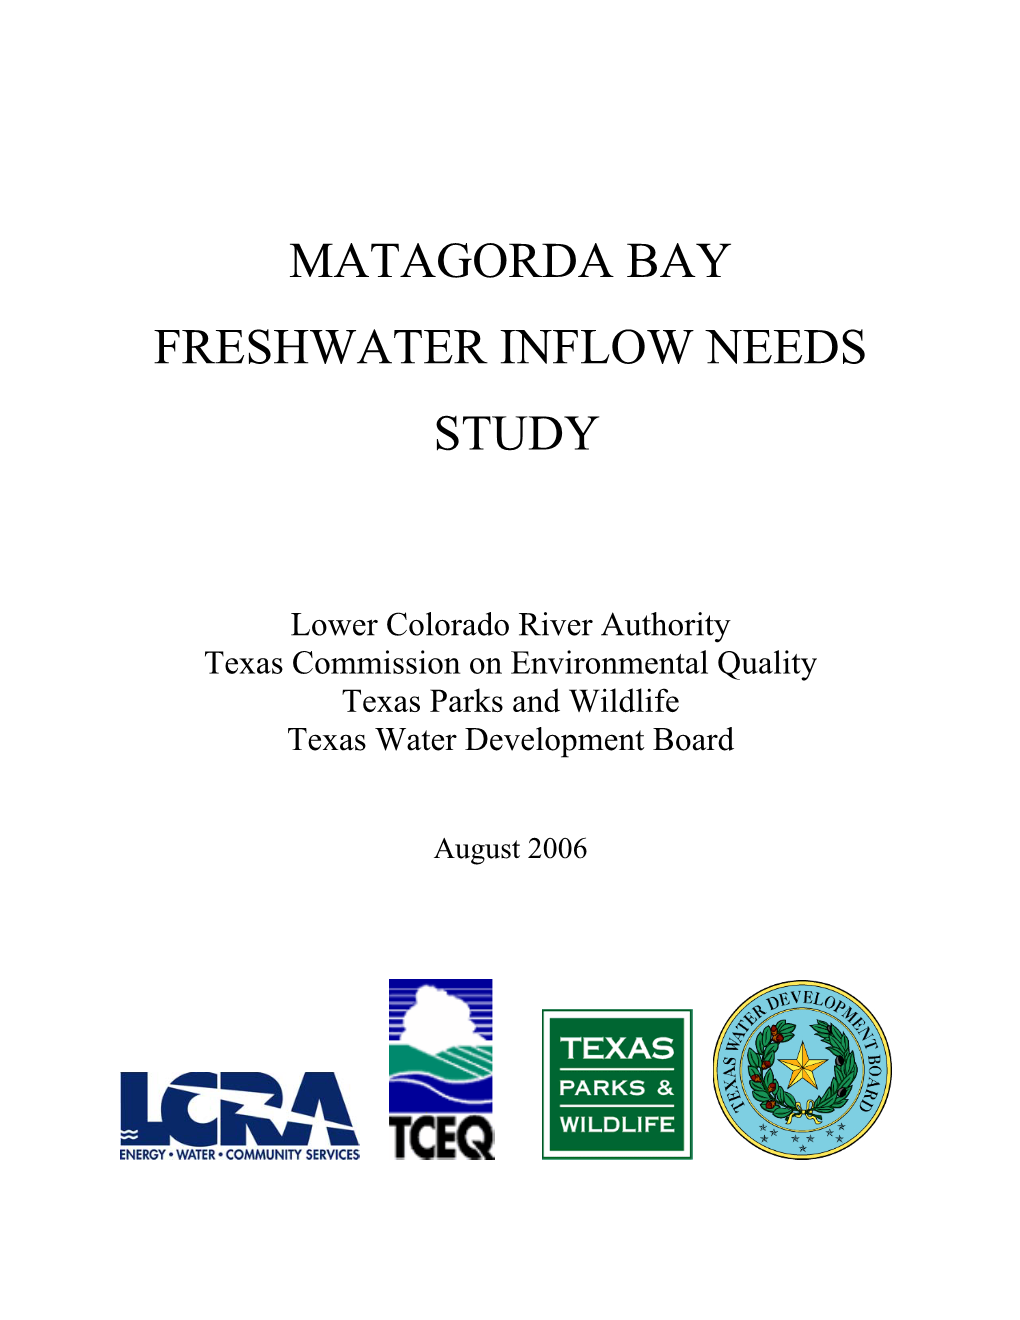 Matagorda Bay Freshwater Inflow Needs Study